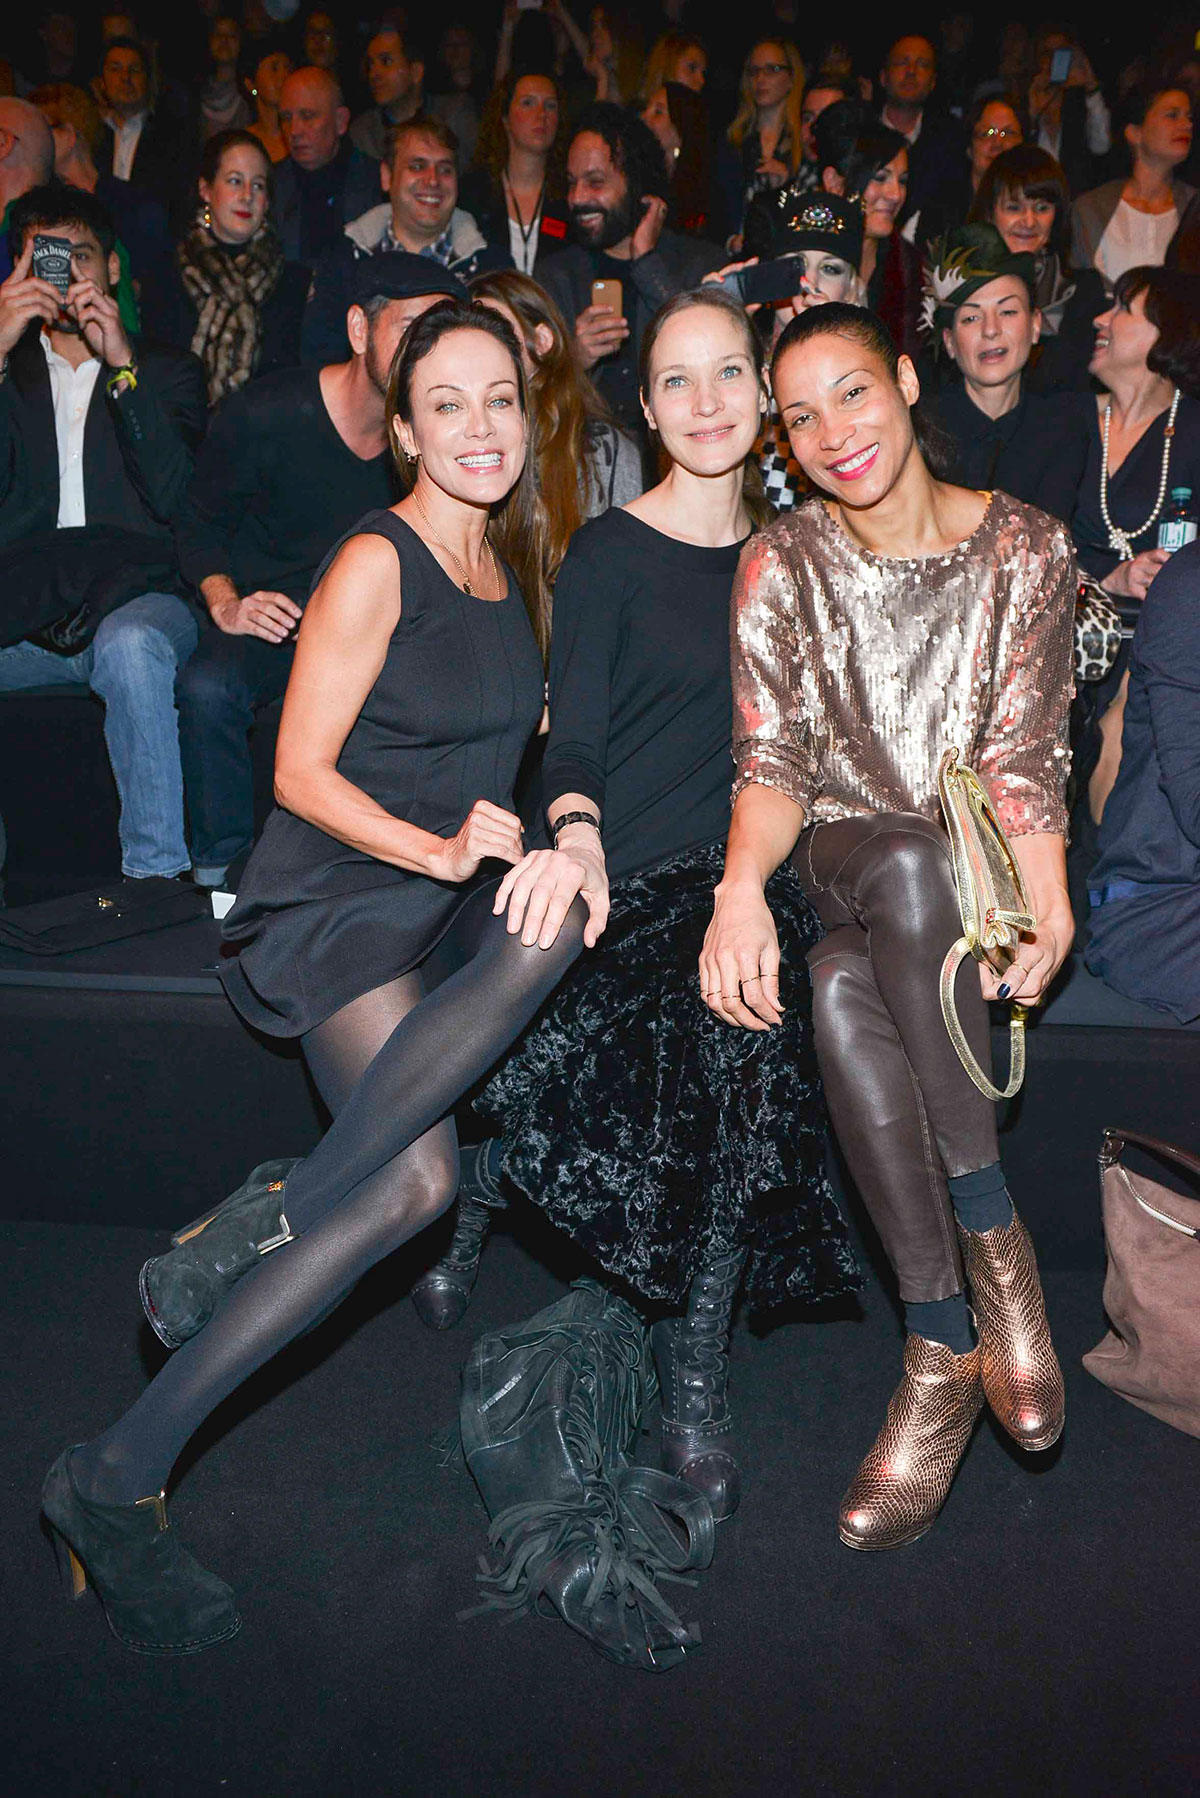 Celebs at Mercedes-Benz Fashion Week 2014 Berlin